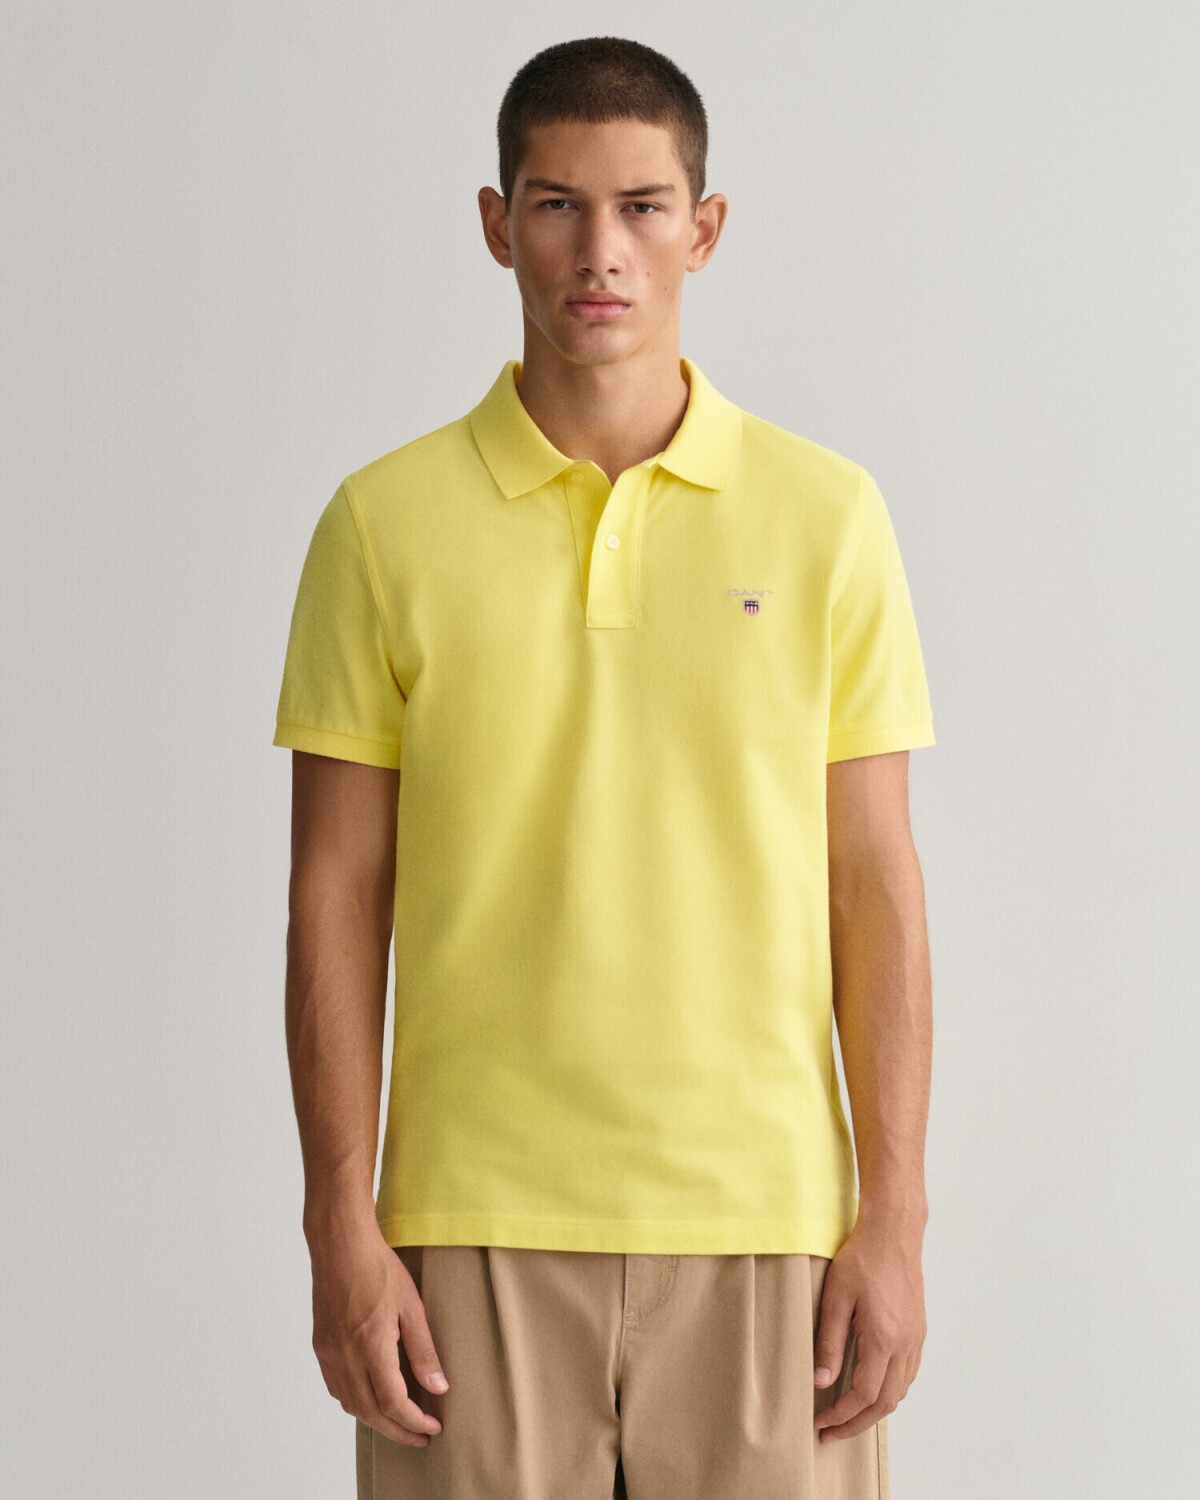 GANT Original Regular Fit Piqué Poloshirt (2201-71) gelb ab 48,45 € |  Preisvergleich bei